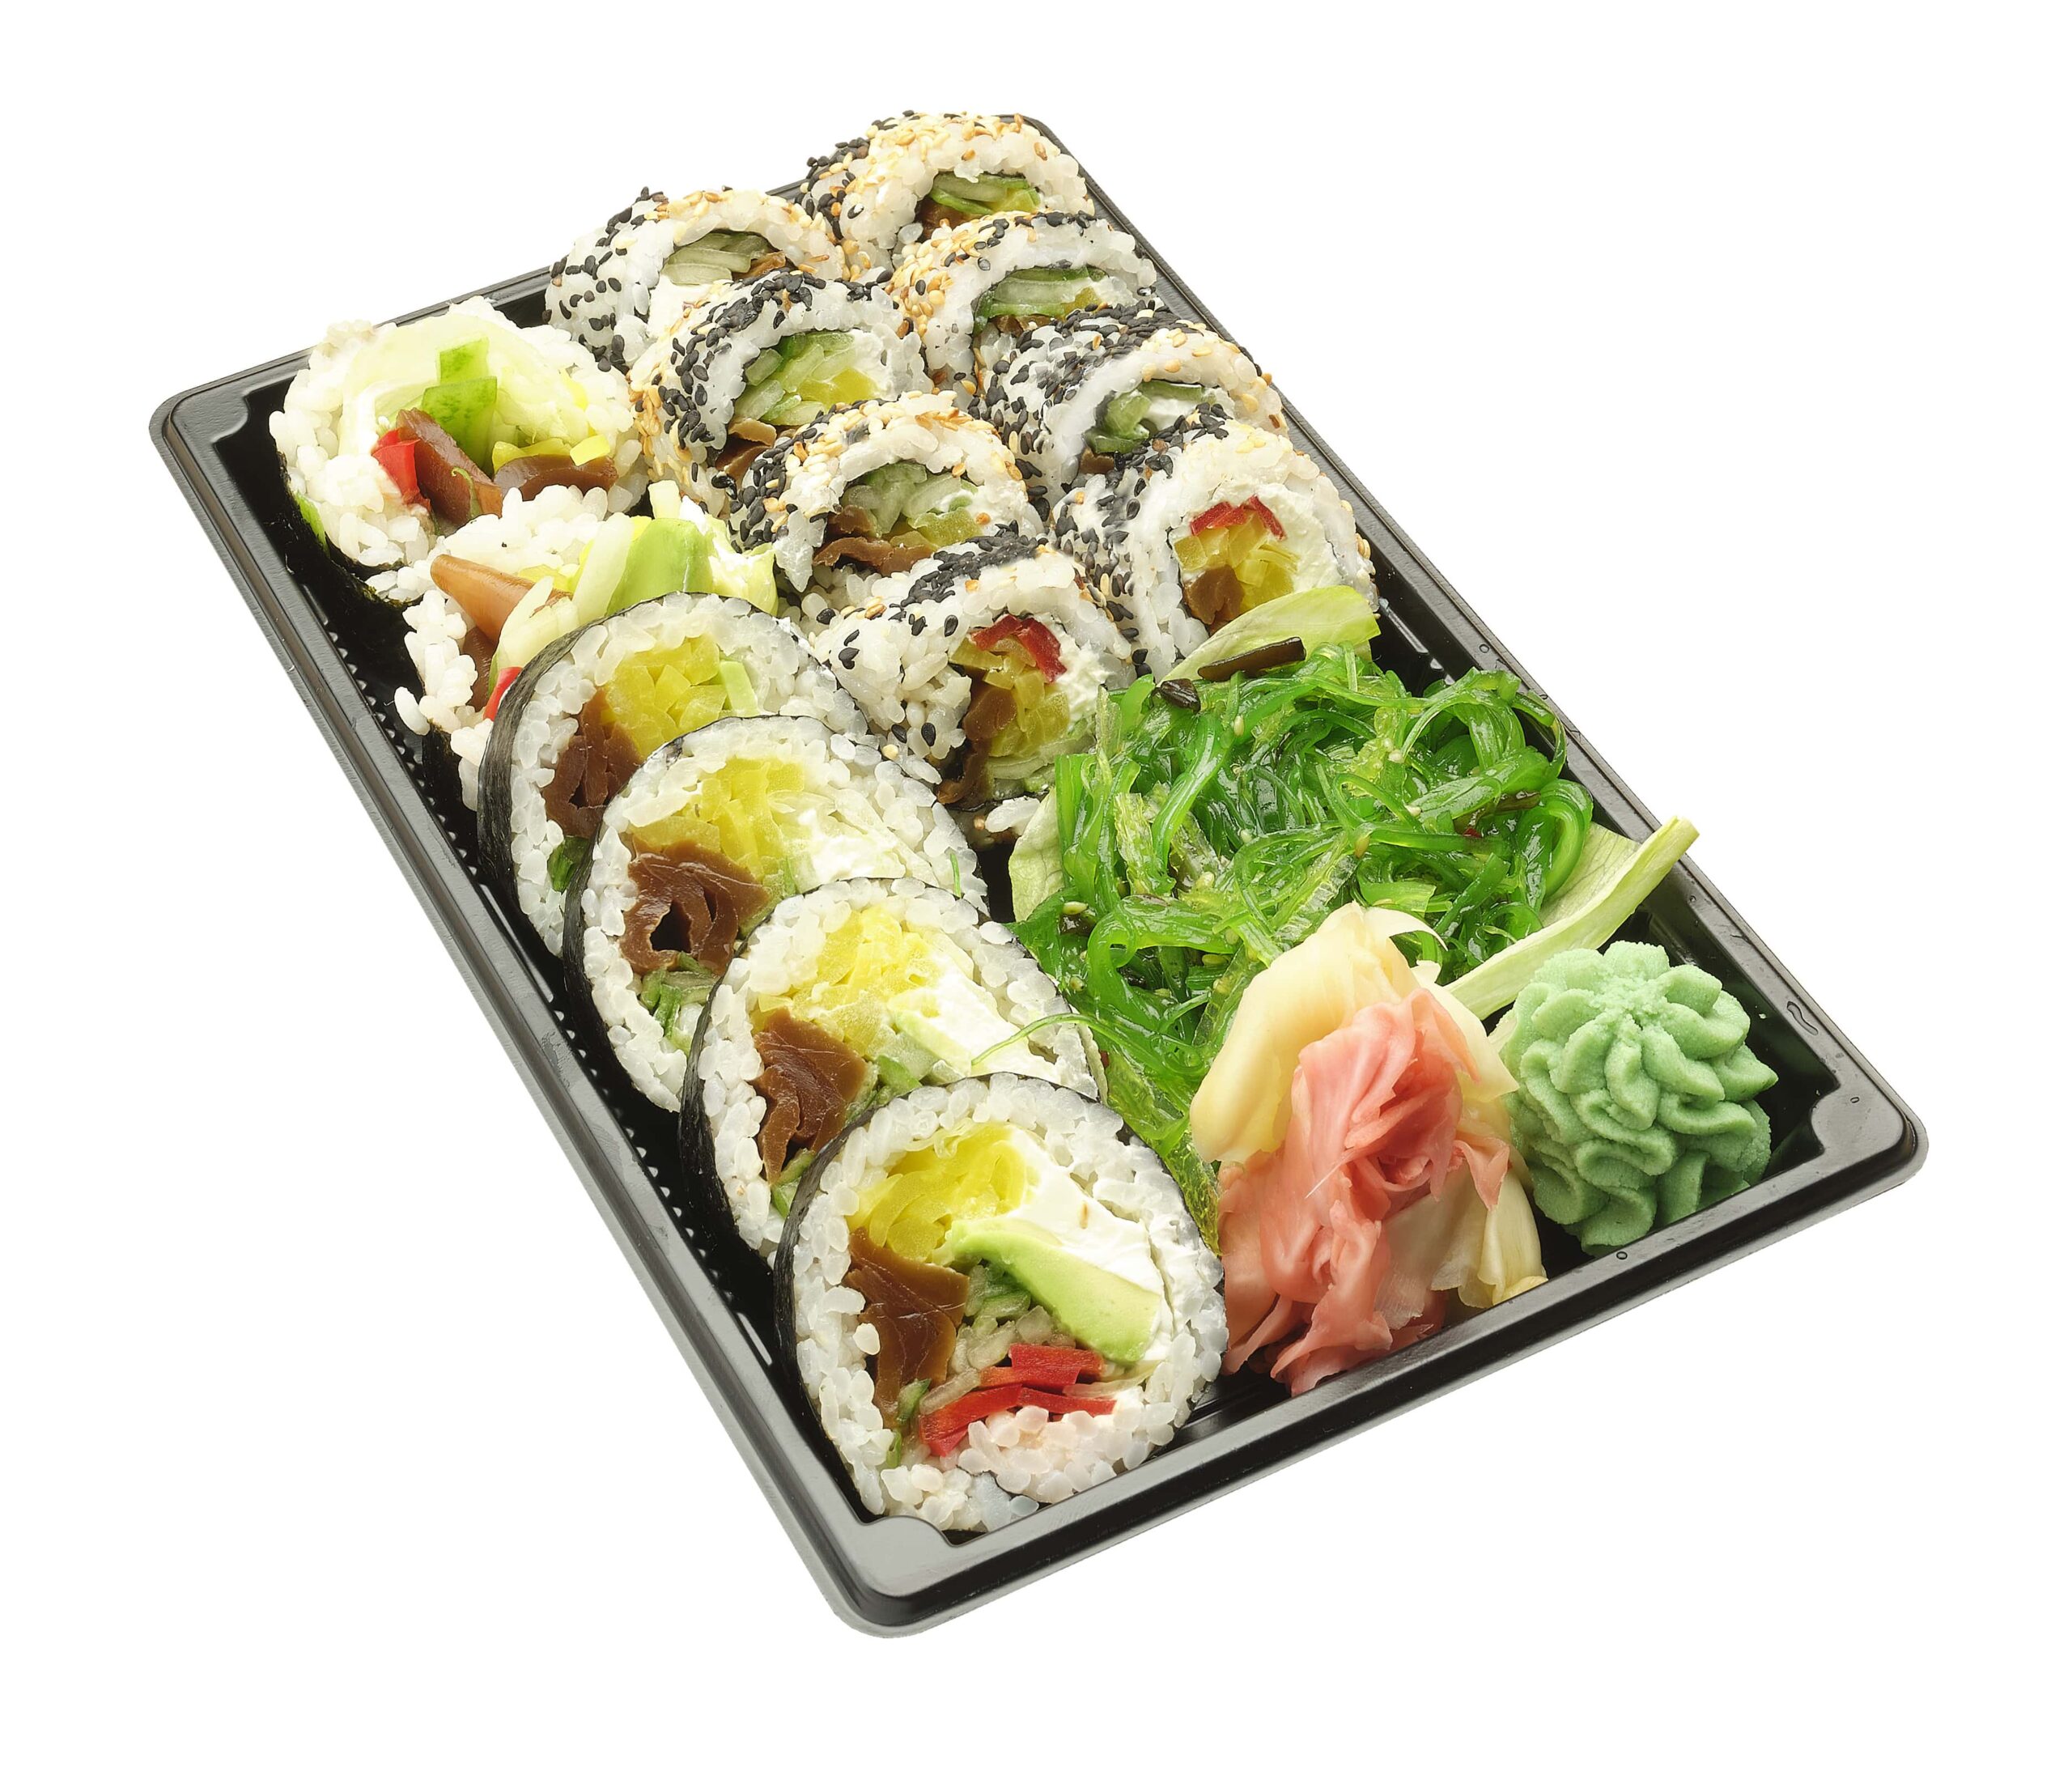 Lunch-1-Wege-yumi-sushi-milanowek